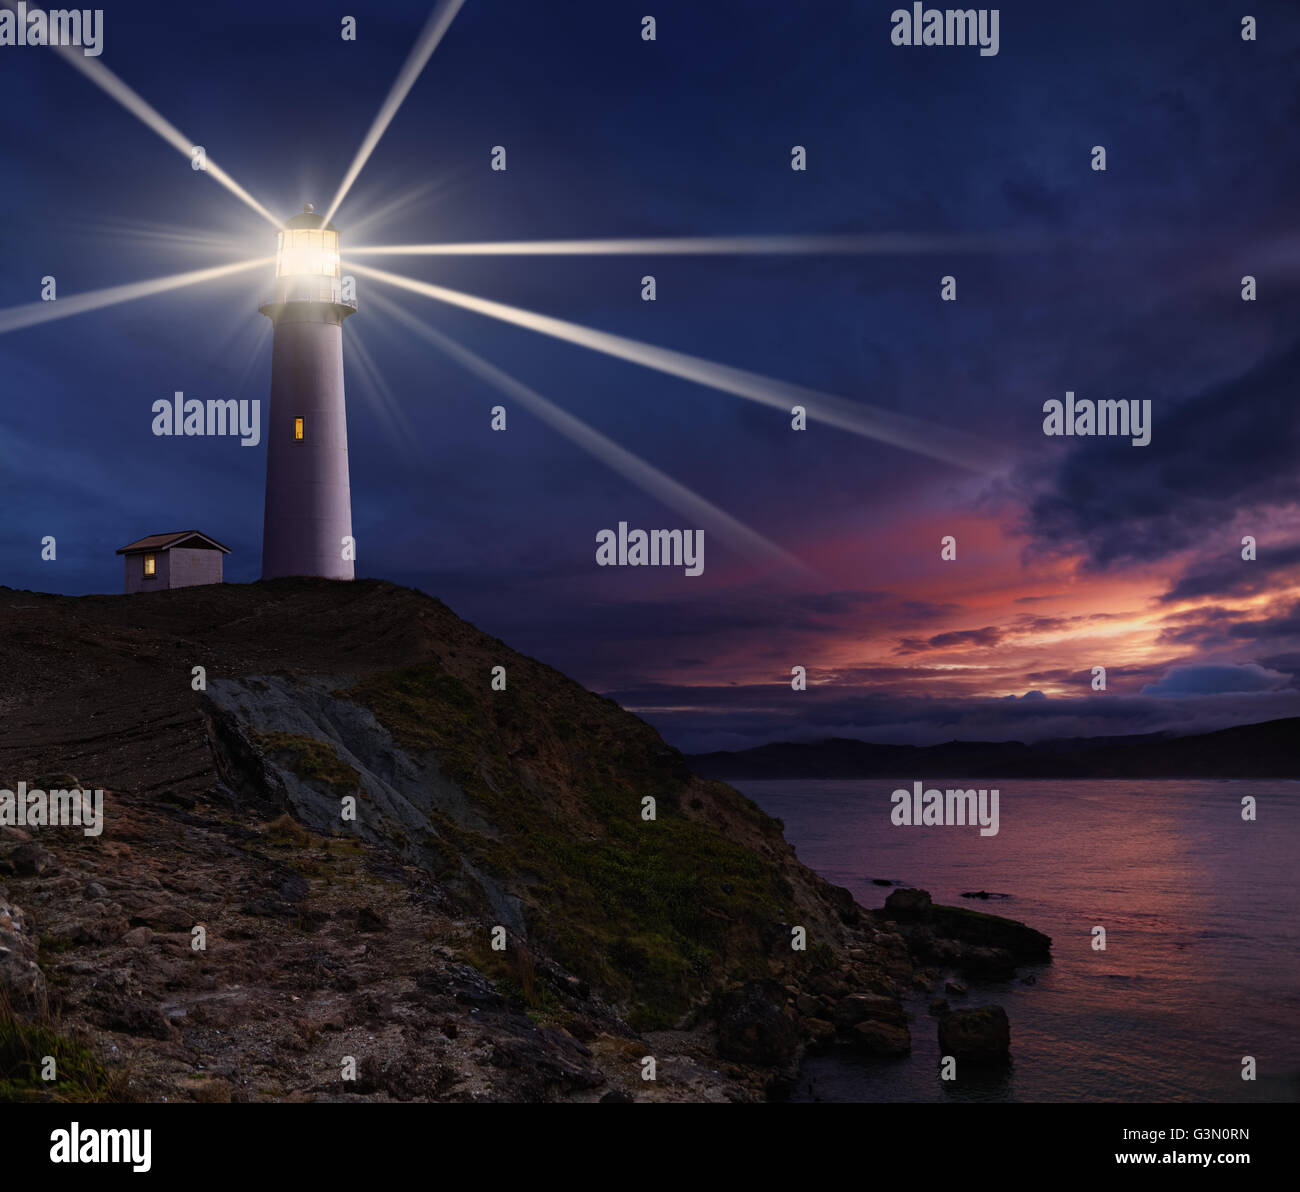 Lighthouse on the island against night sky Stock Photo